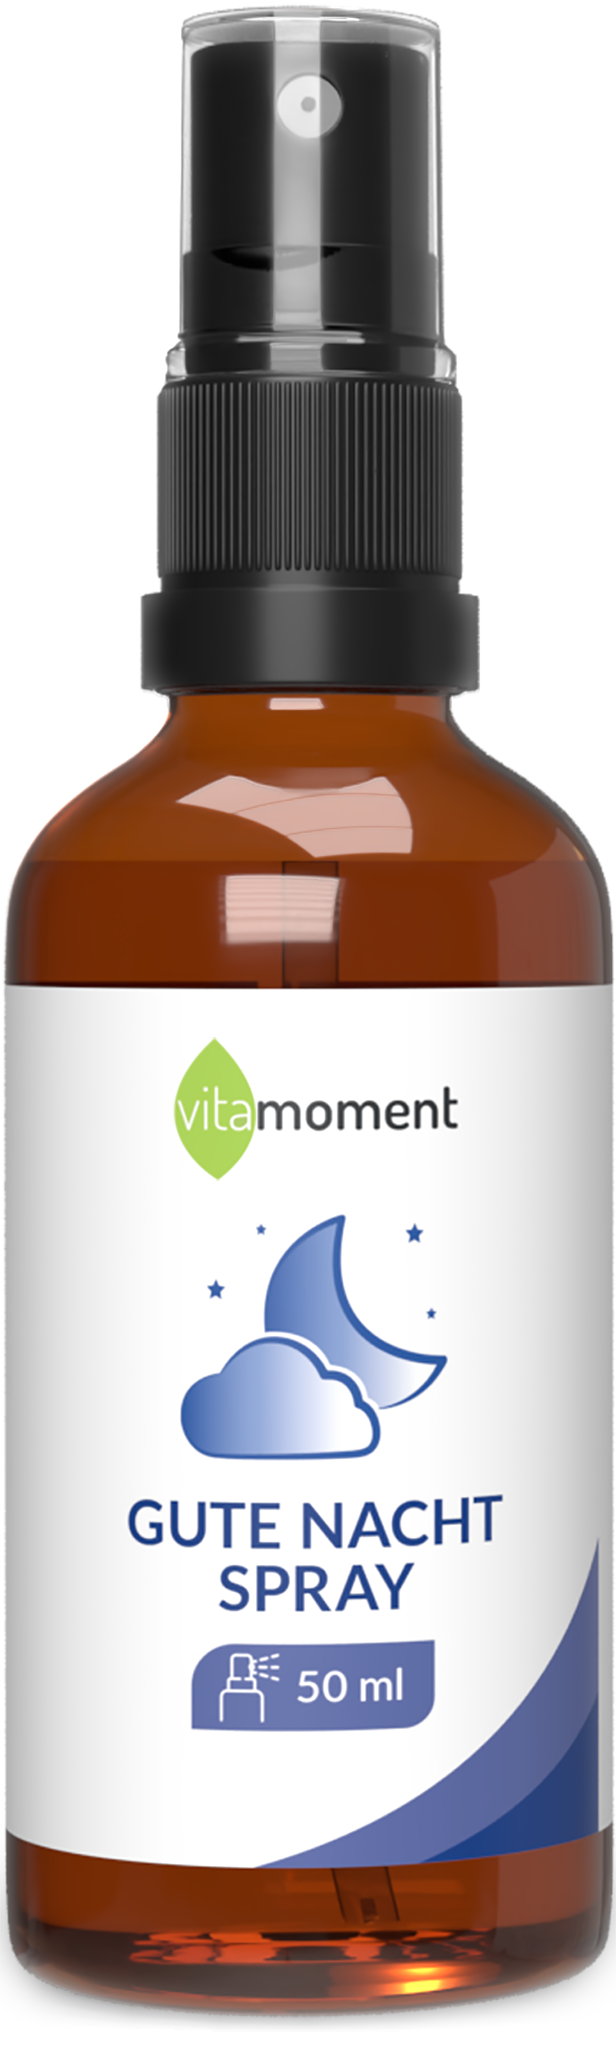 Gute Nacht Spray - VitaMoment Produkt